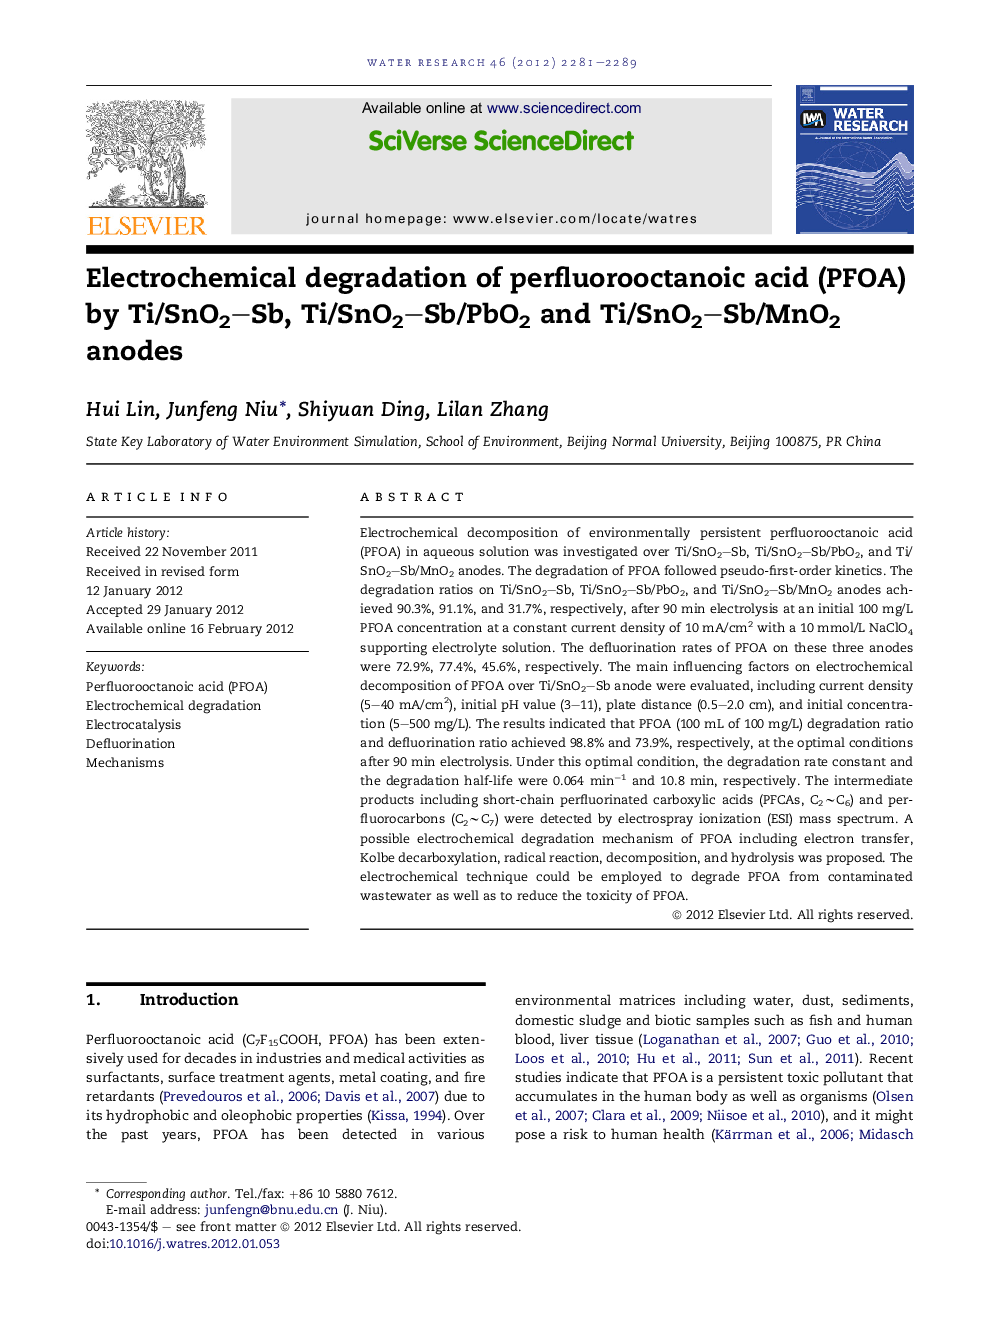 Electrochemical degradation of perfluorooctanoic acid (PFOA) by Ti/SnO2–Sb, Ti/SnO2–Sb/PbO2 and Ti/SnO2–Sb/MnO2 anodes